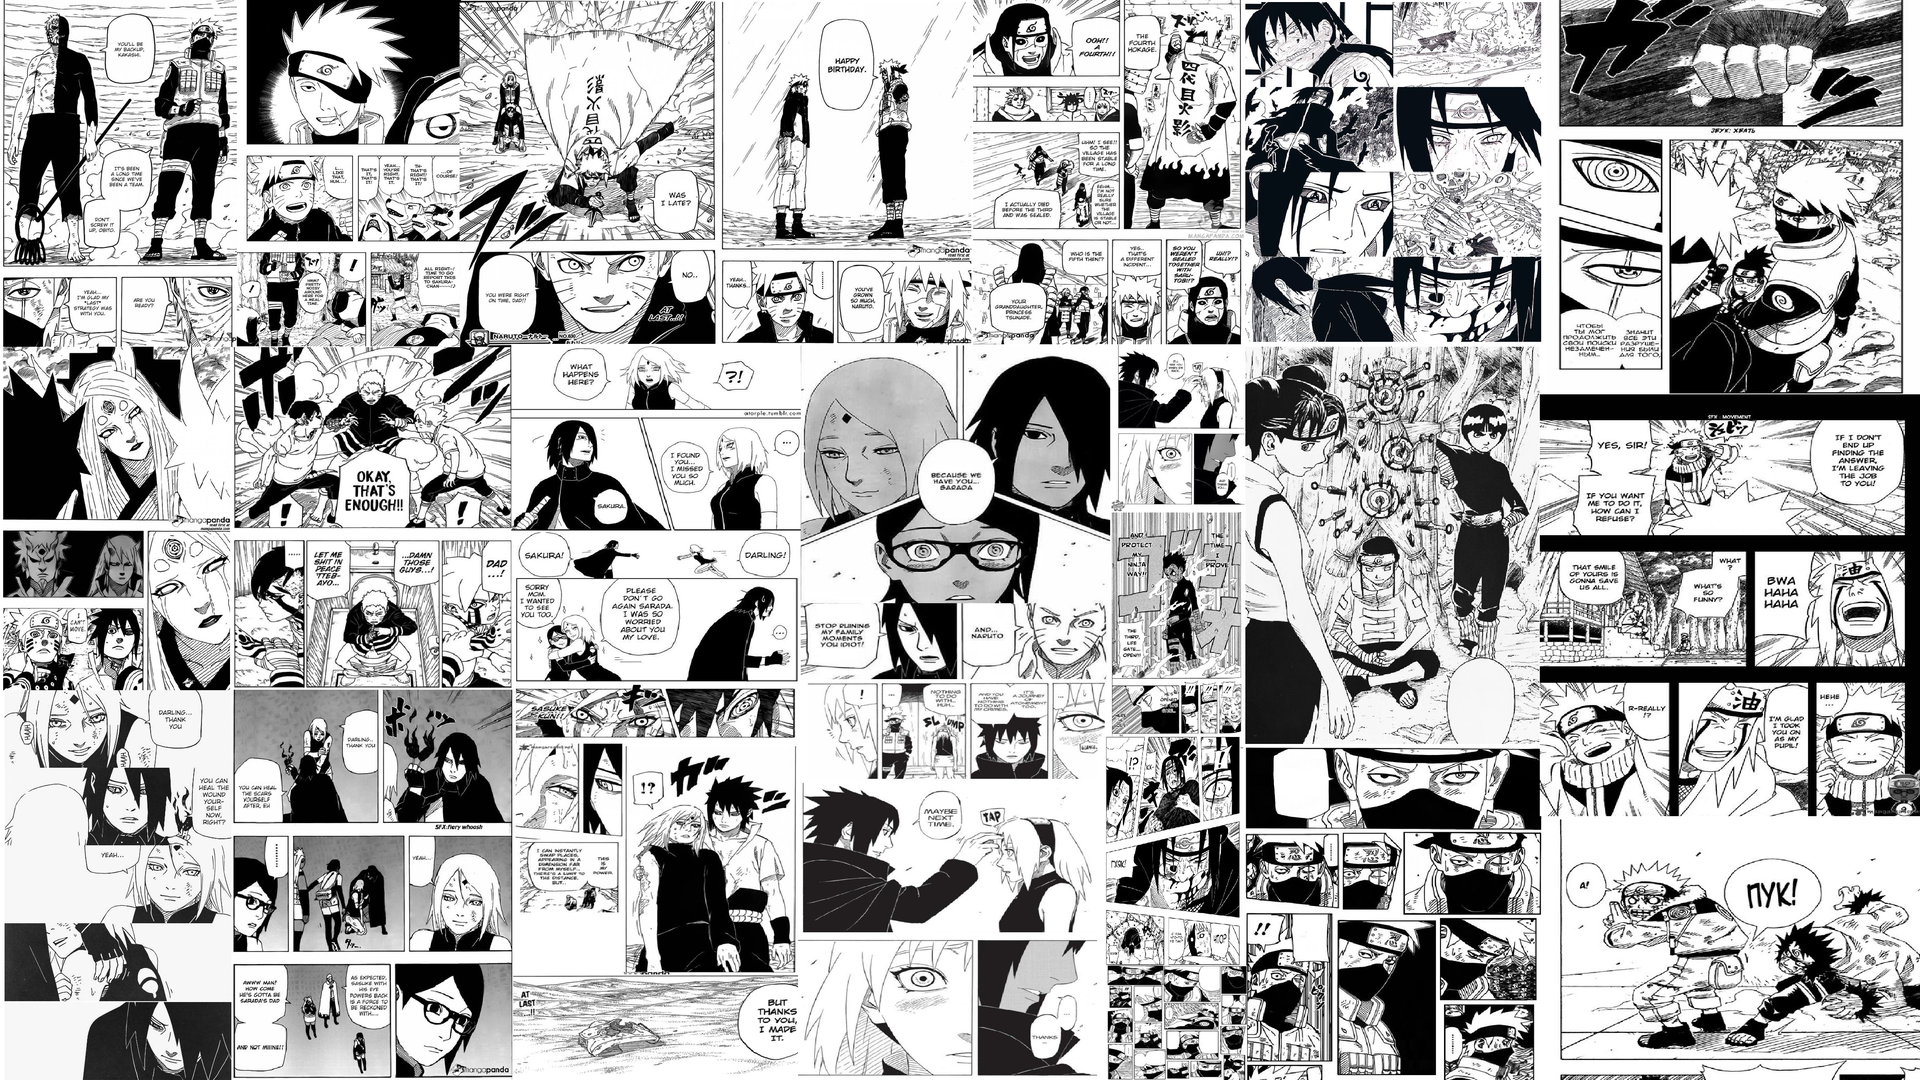 Naruto Manga Panel Wallpaper [1920 x 1080]